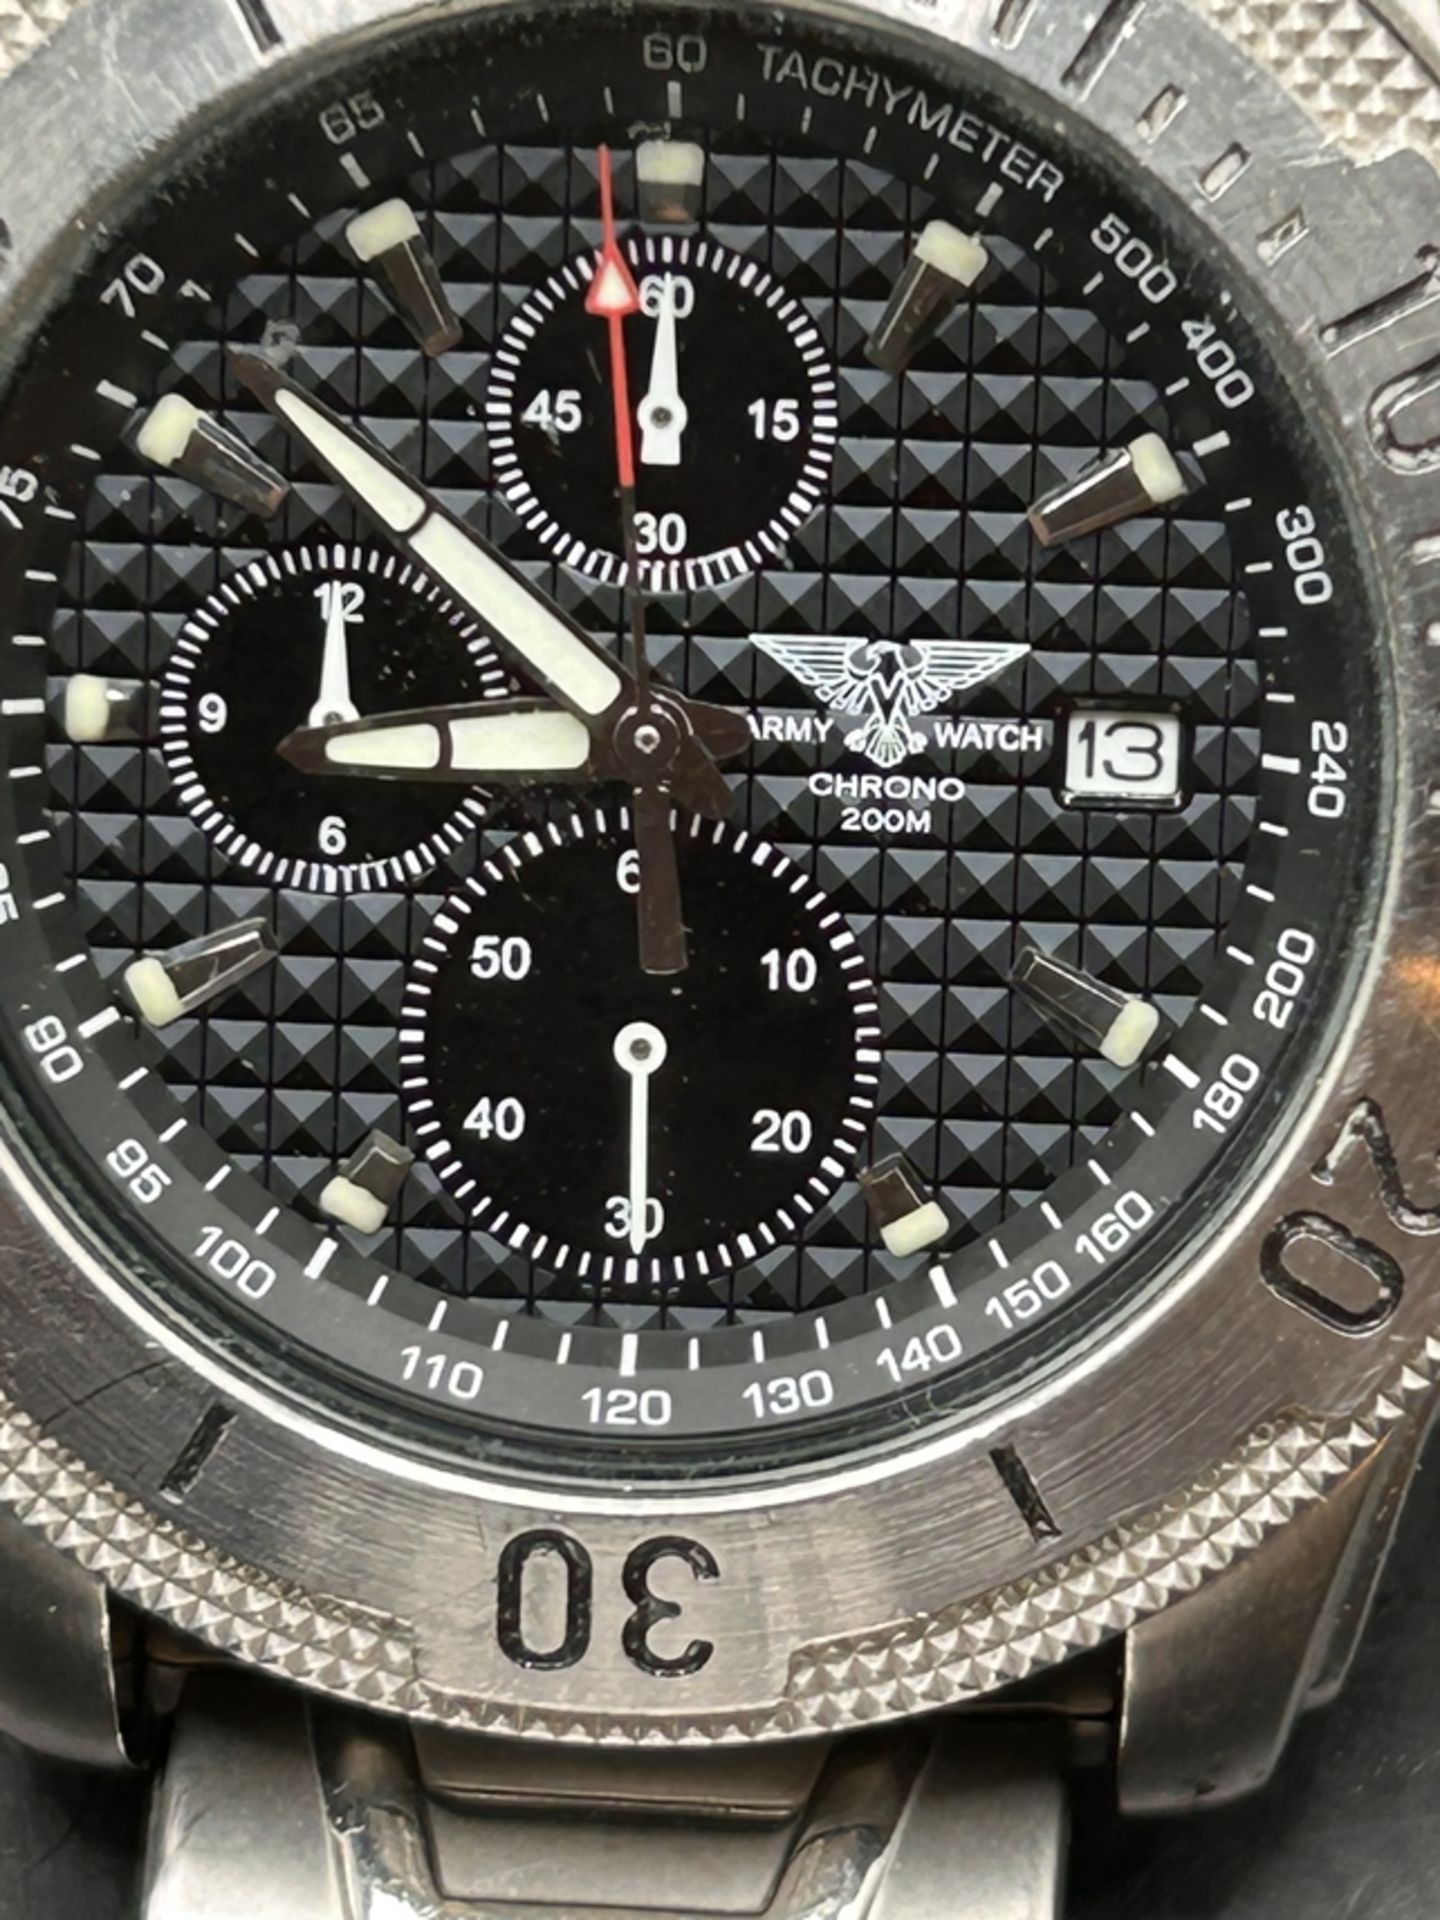 Army watch chrono, 200 m, Stahlband, Nr. 59050075, nicht überprüft - Image 2 of 4